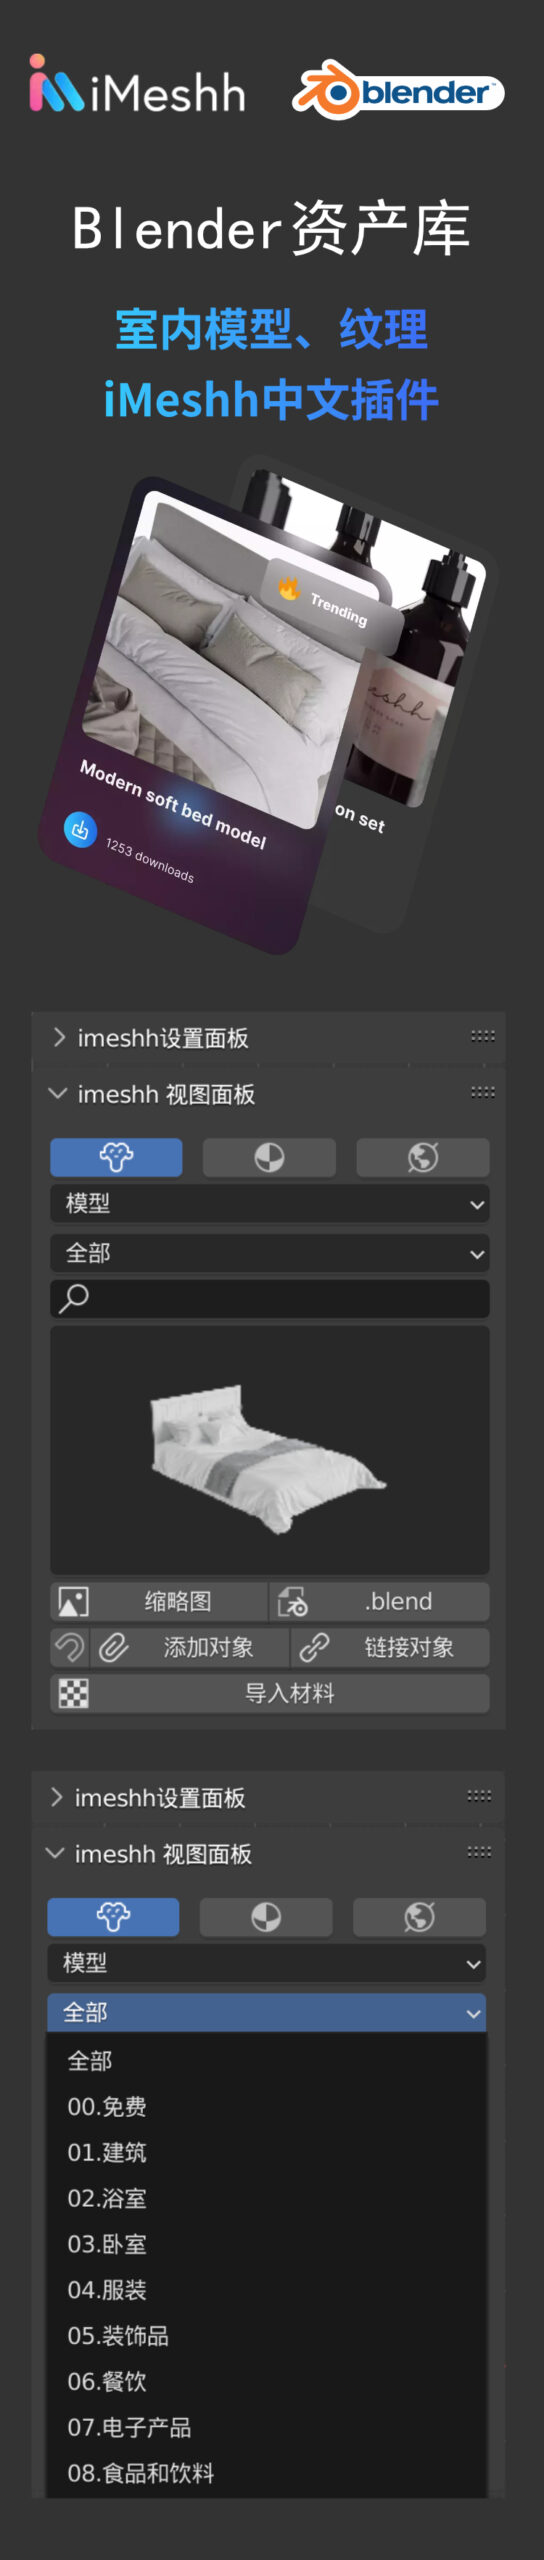 Blender室内设计资产库+imeshh插件 中文路径中文界面 11月03日更新